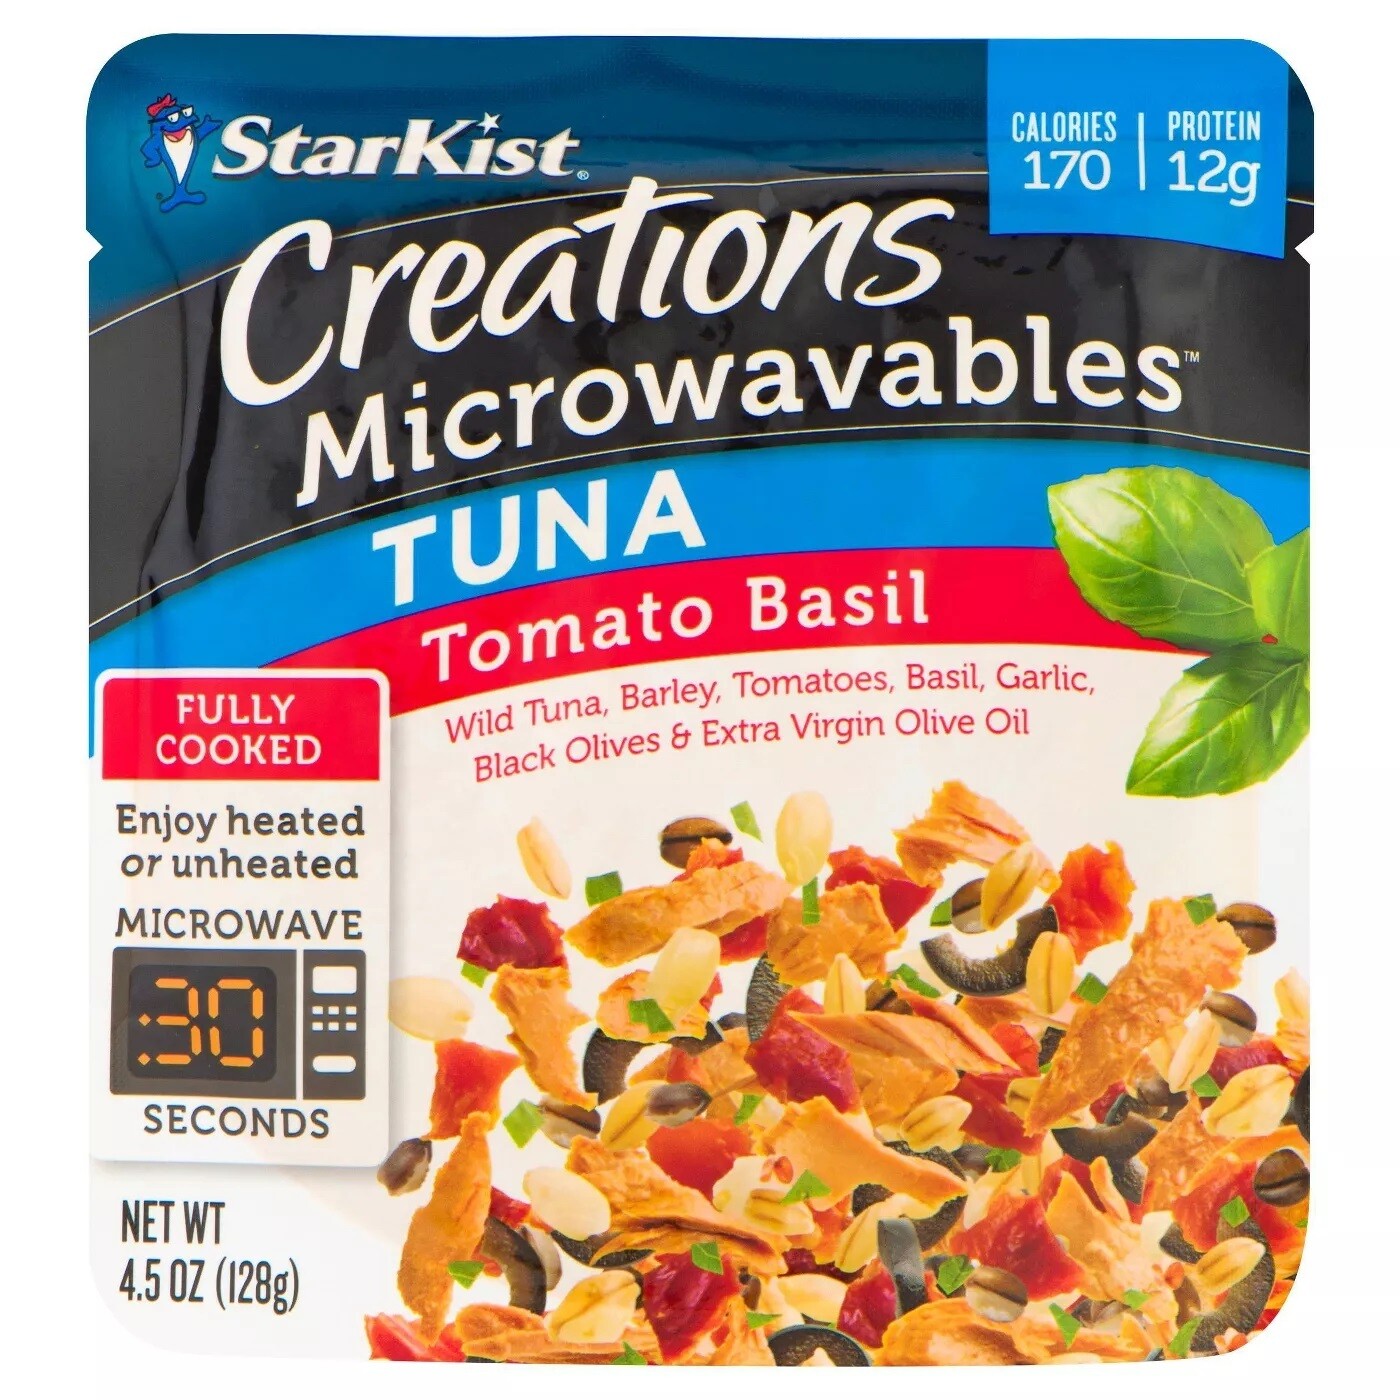 Starkist Creations Microwavables - Tomato Basil